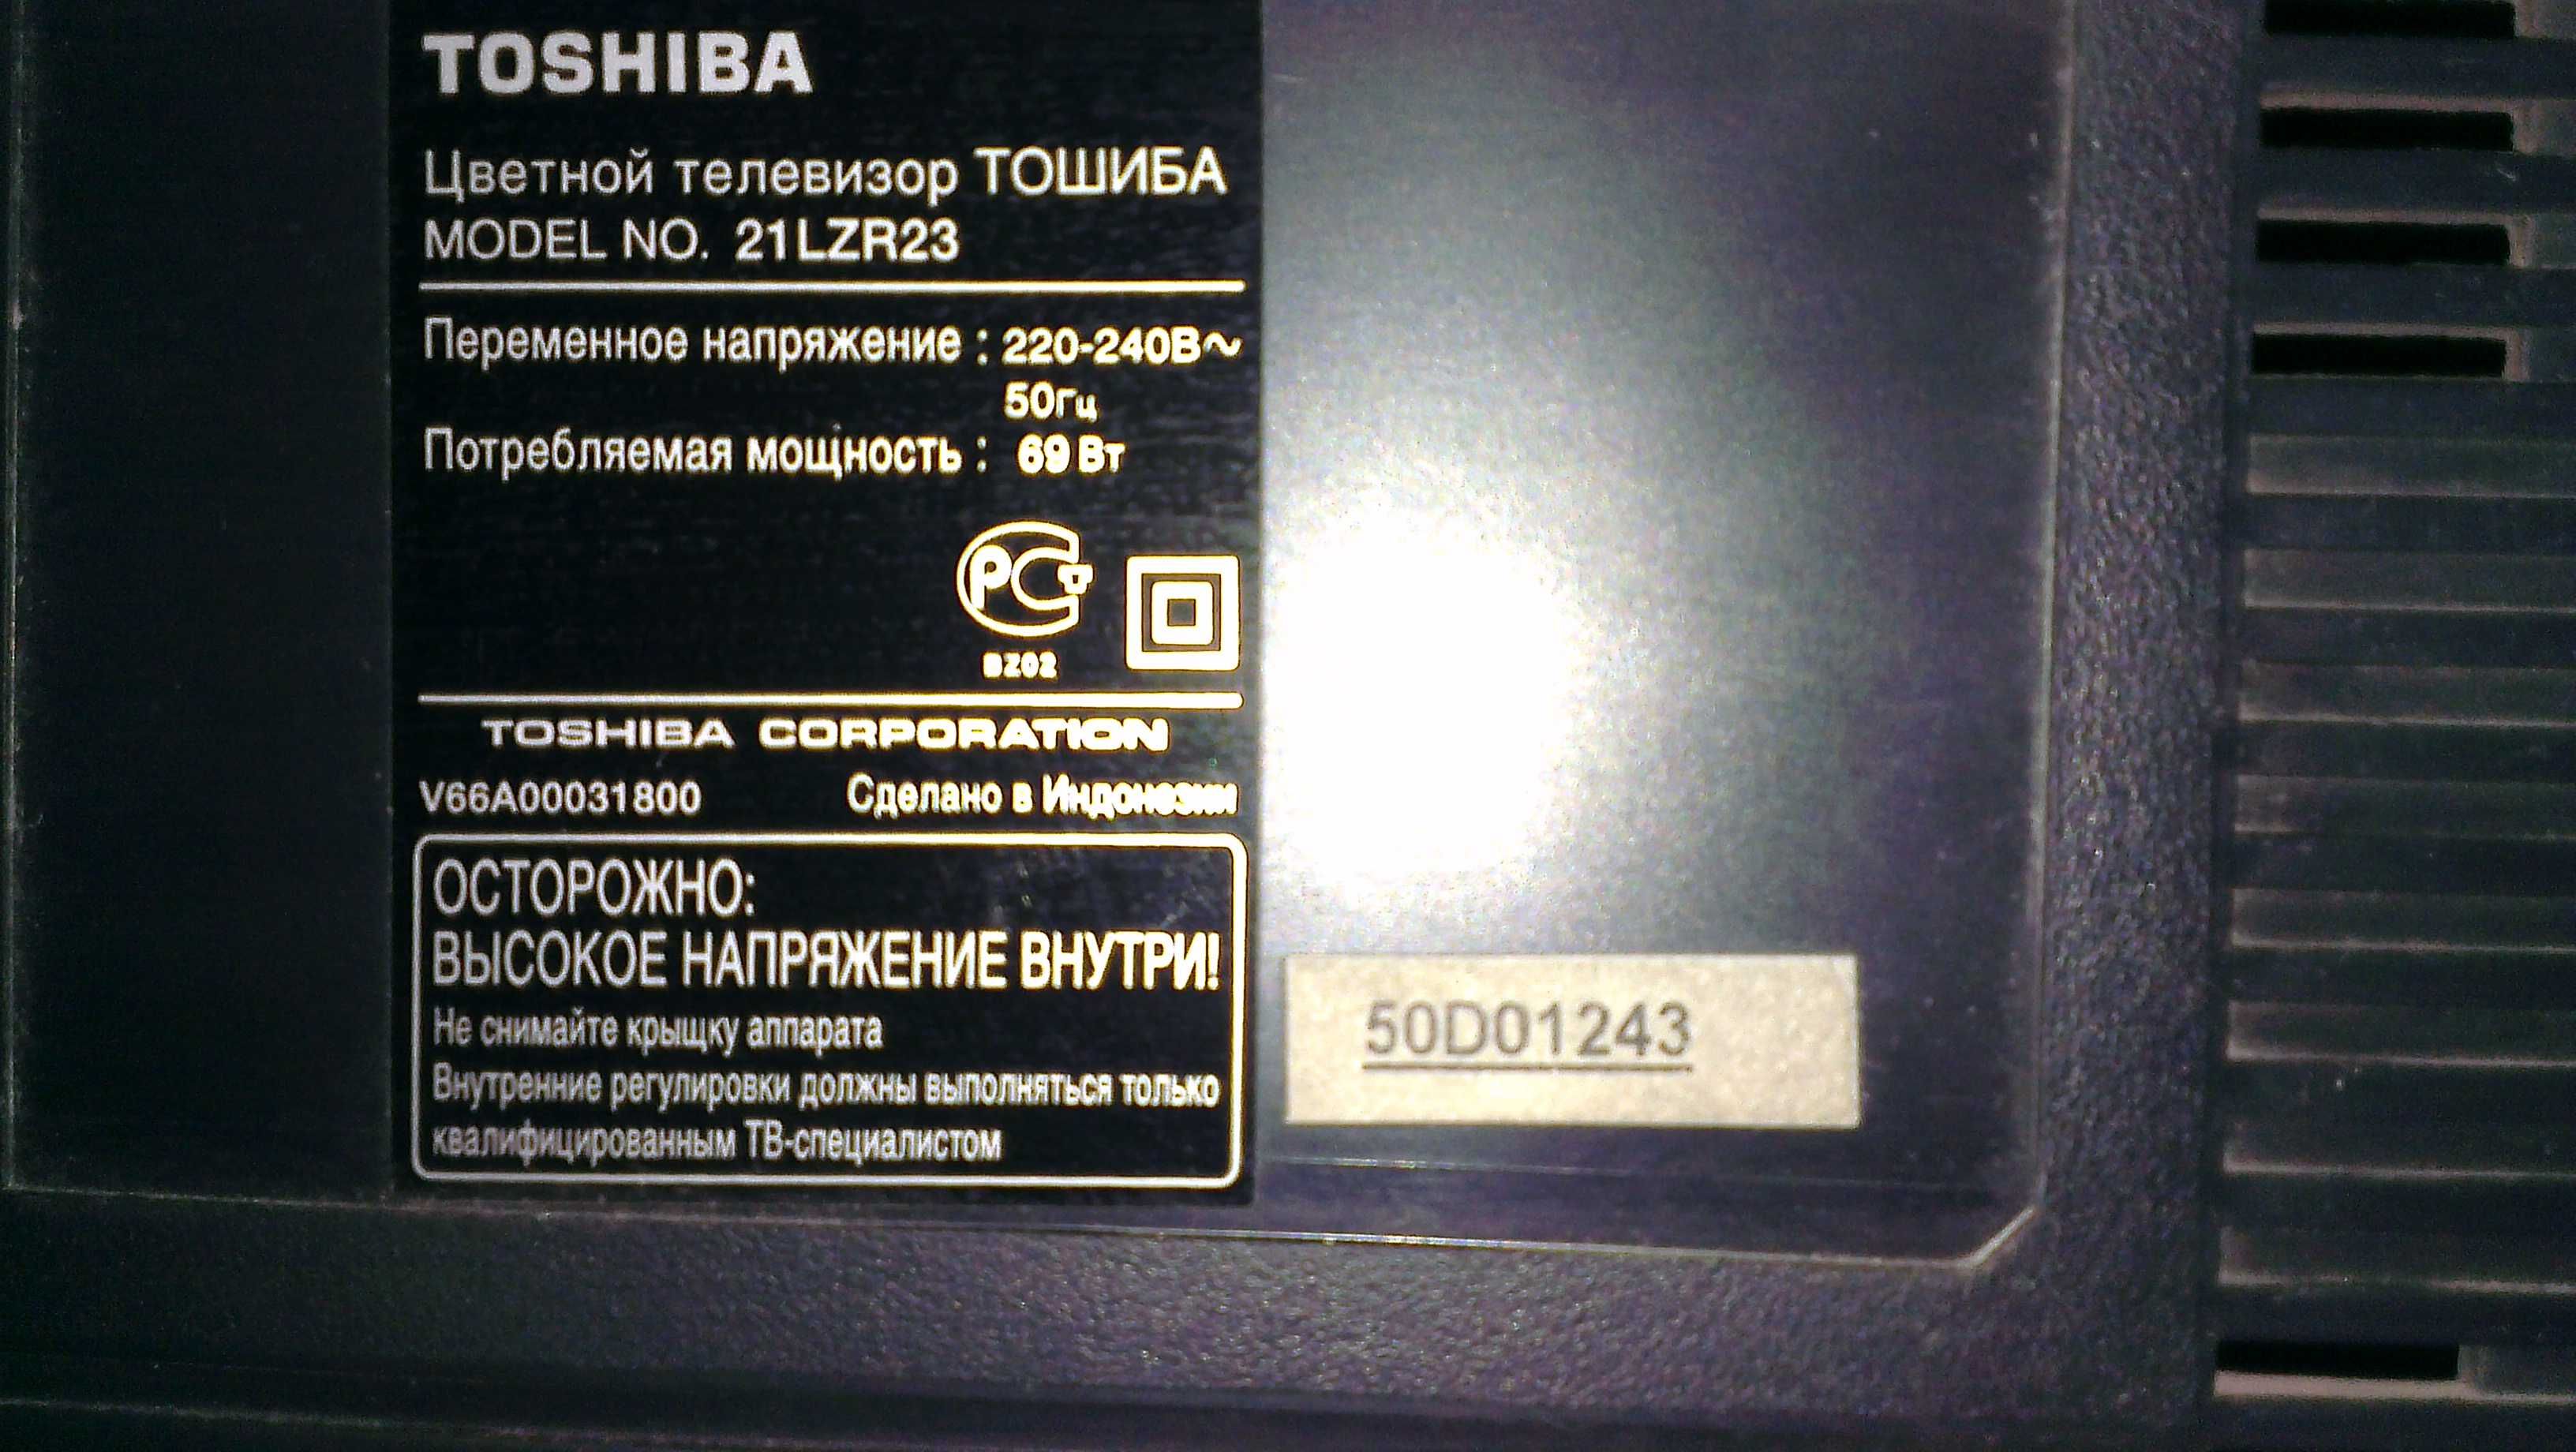 Телевизор "Toshiba 21LZR 23", 51 см.(Кубик)